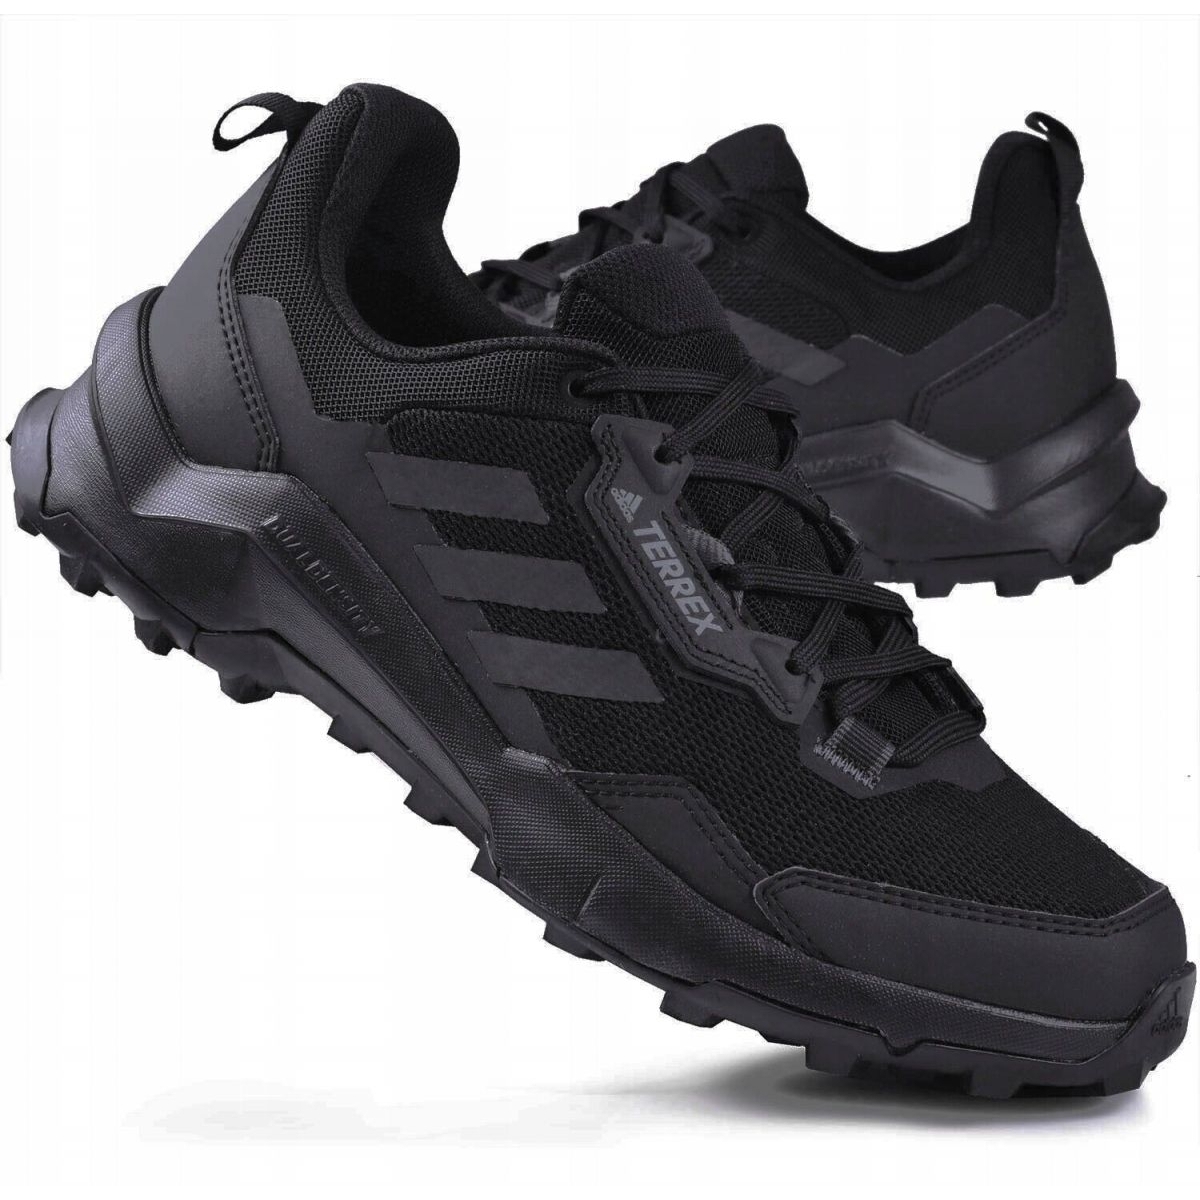 Adidas Men's Terrex Ax4 GTX Sneaker ONE SIZE CORE BLACK/CARBON/GREY FOUR - CORE BLACK/CARBON/GREY FOUR, 9